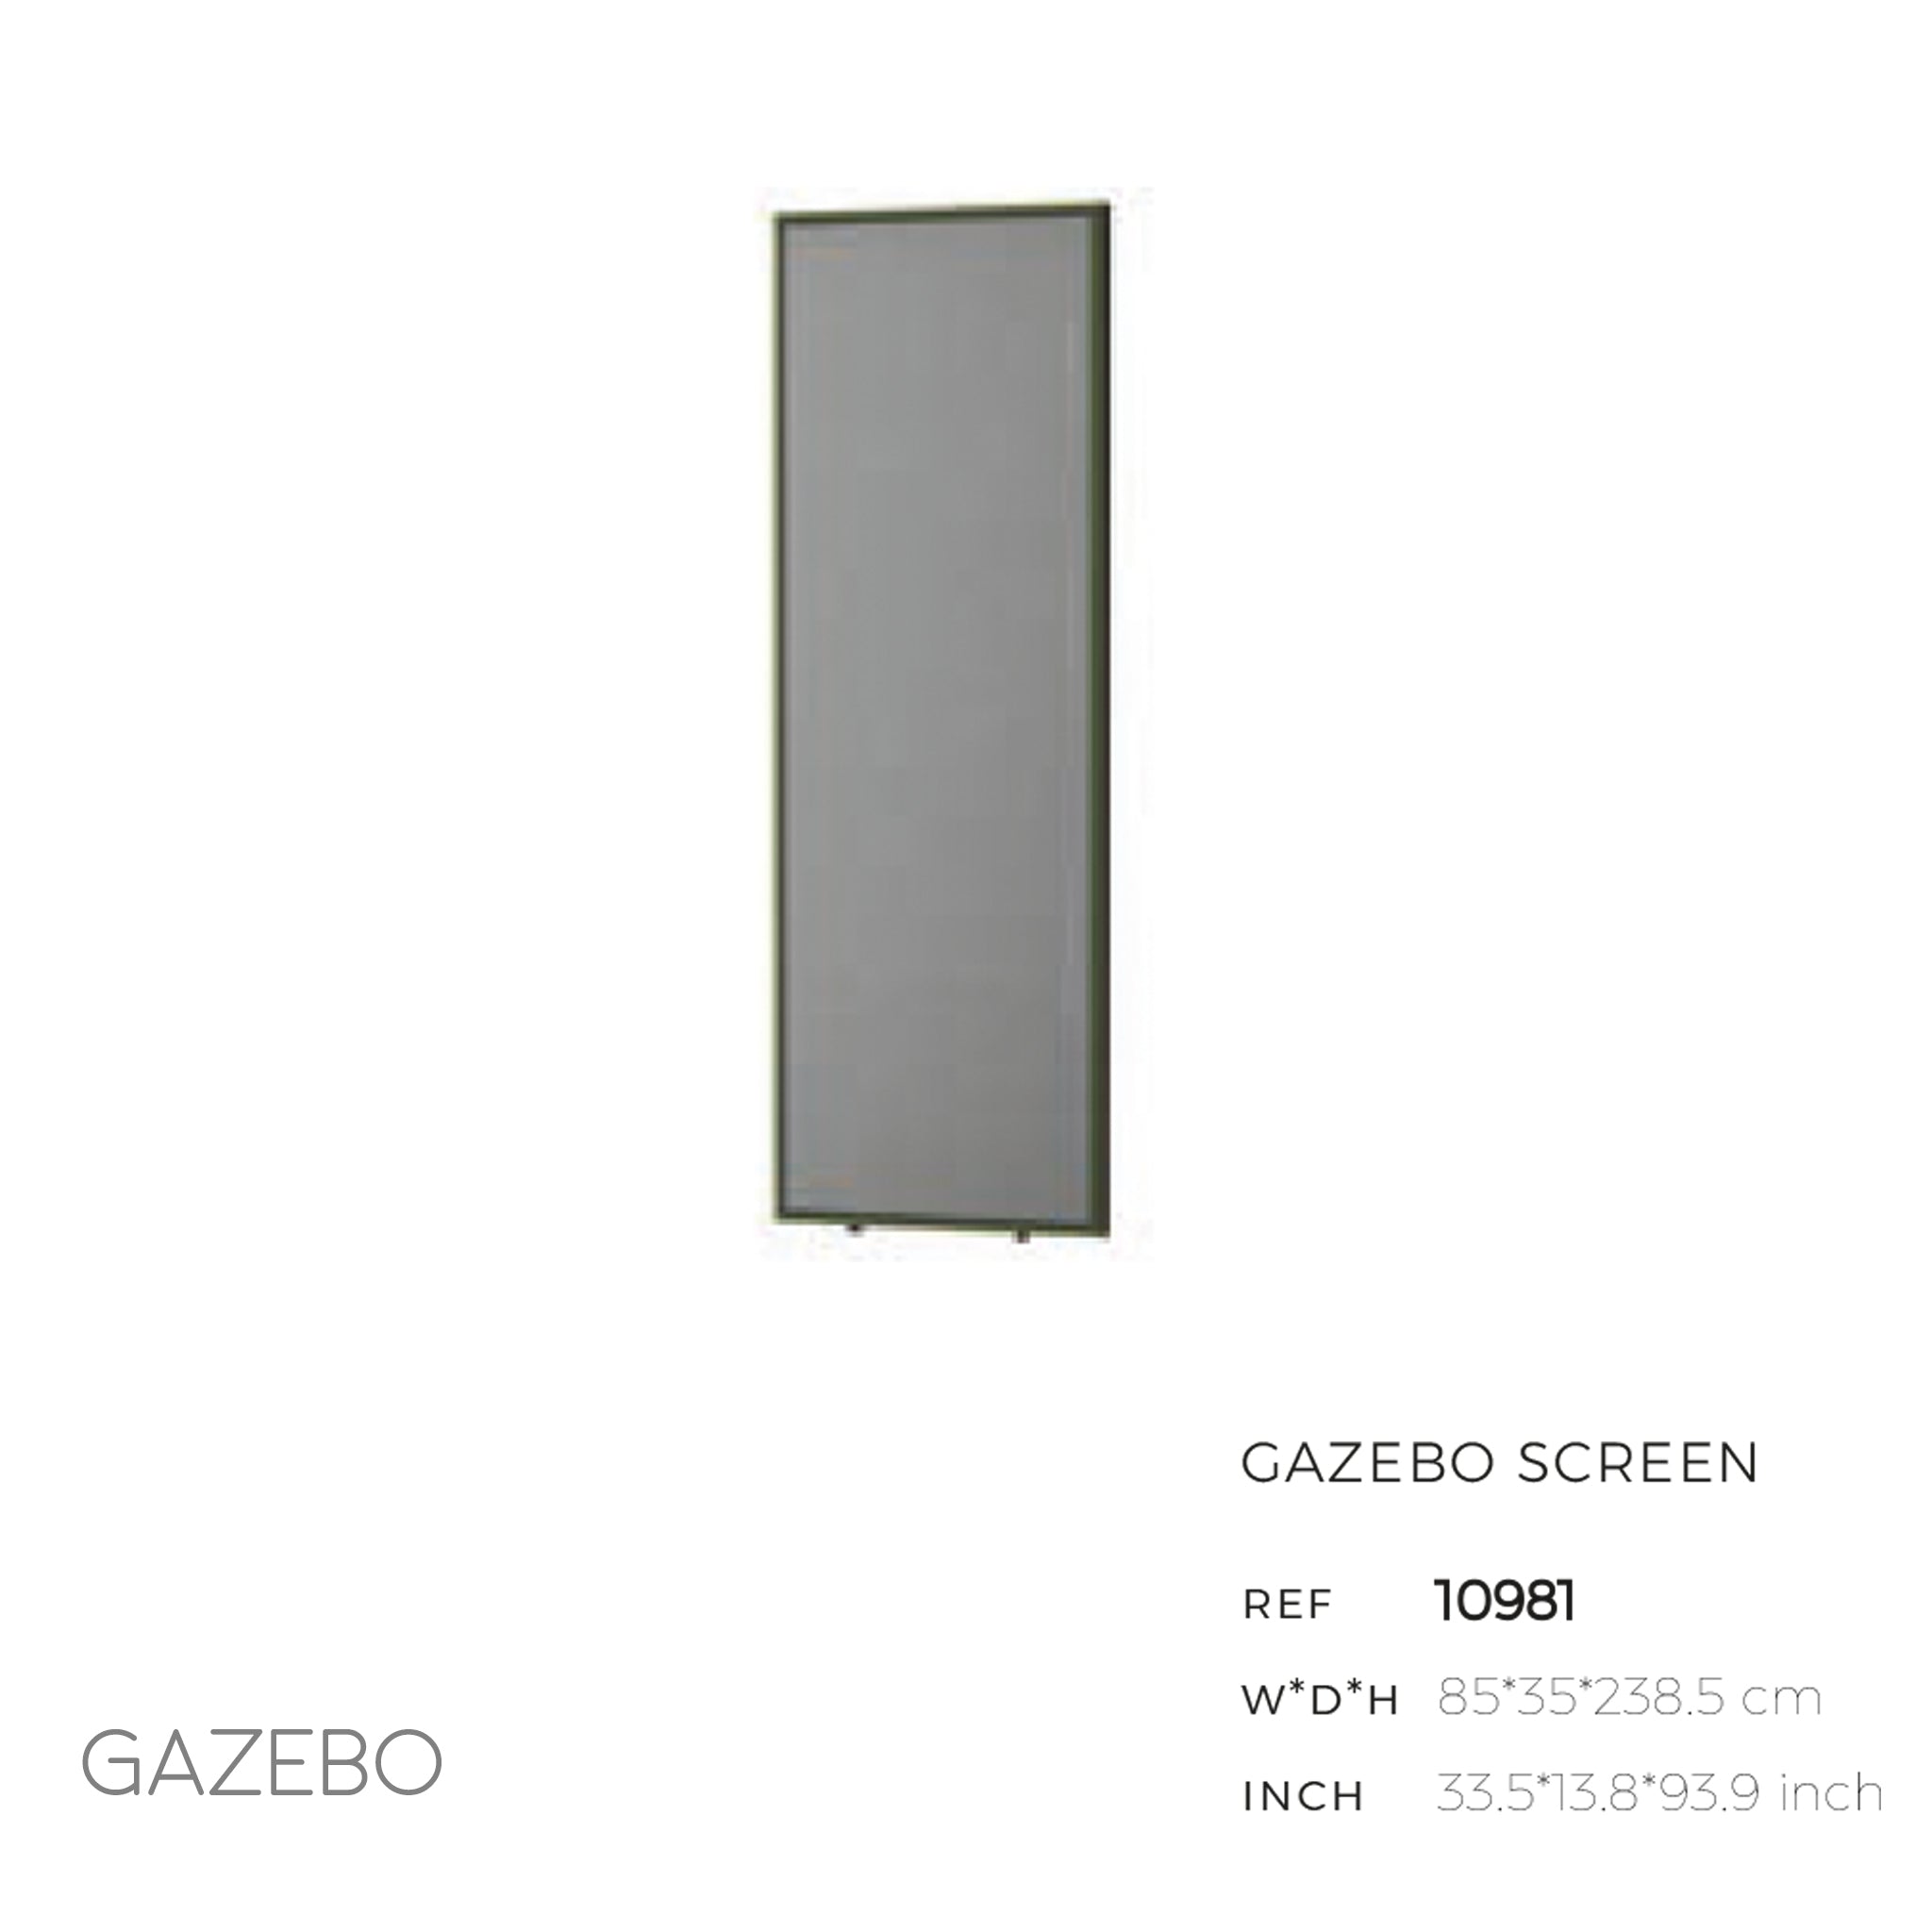 Gazebo Collection